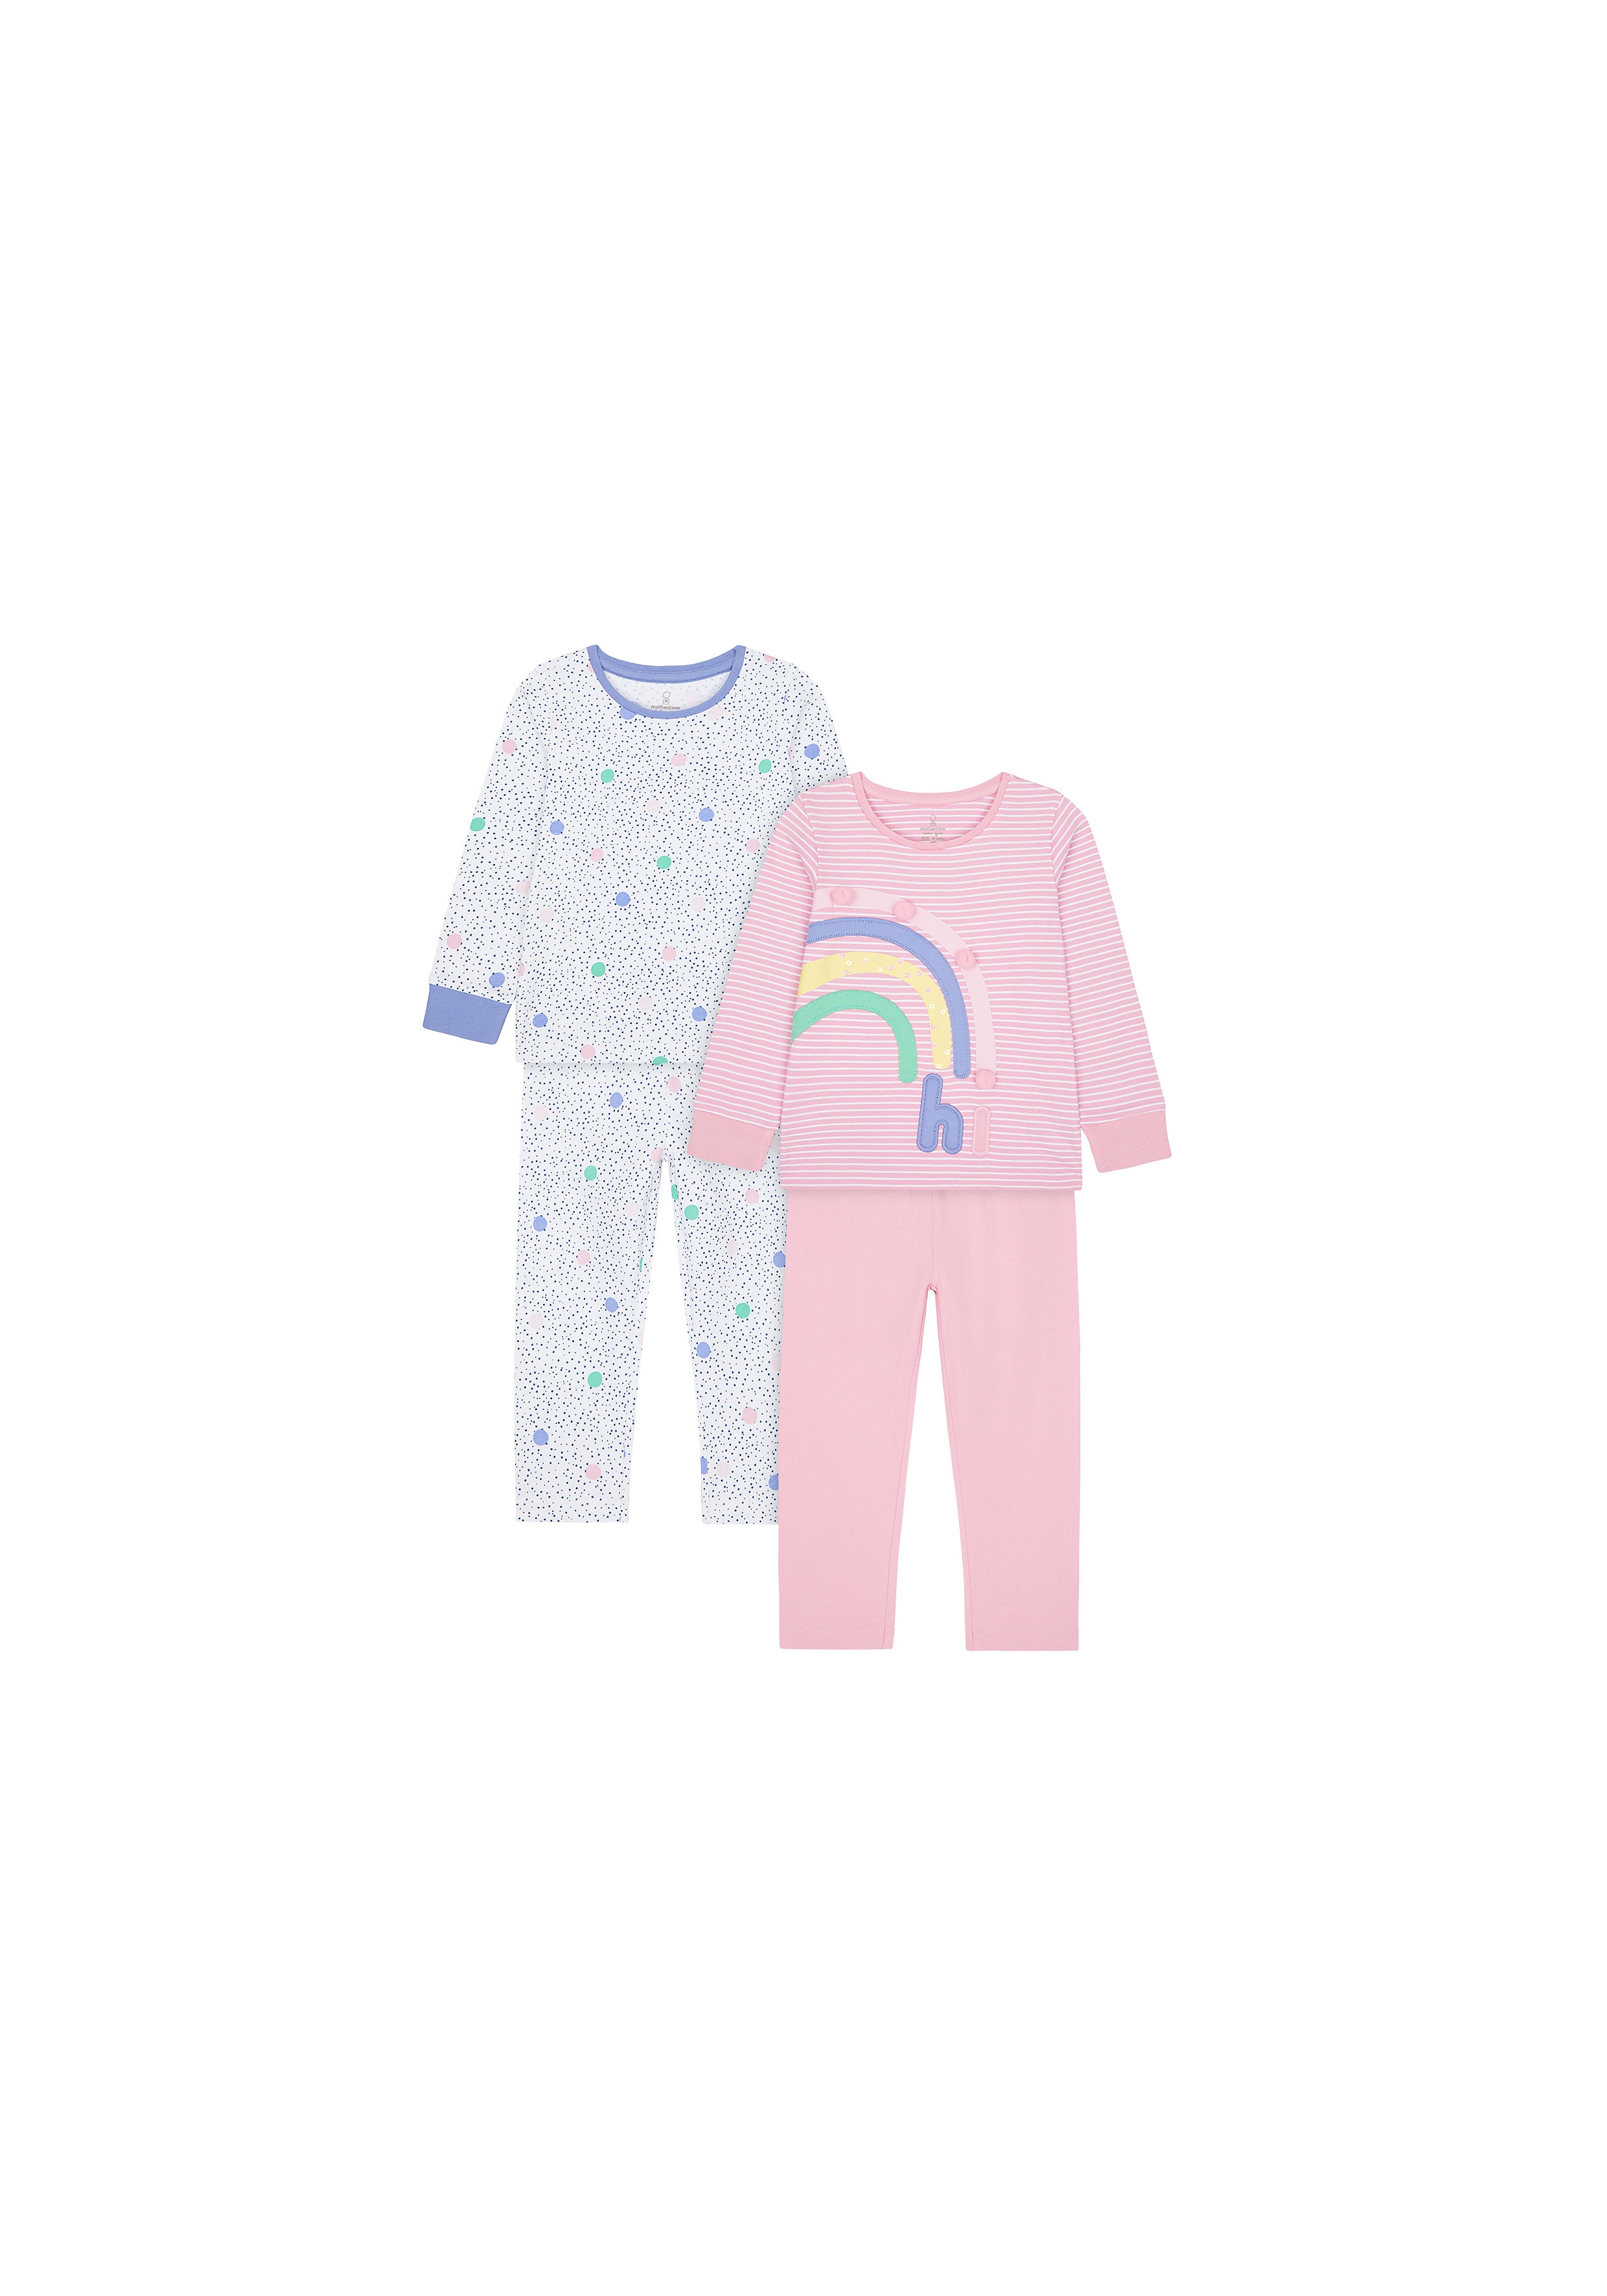 Girls Full Sleeves Pyjama Set Rainbow Patchwork - Pack Of 2 - Pink White